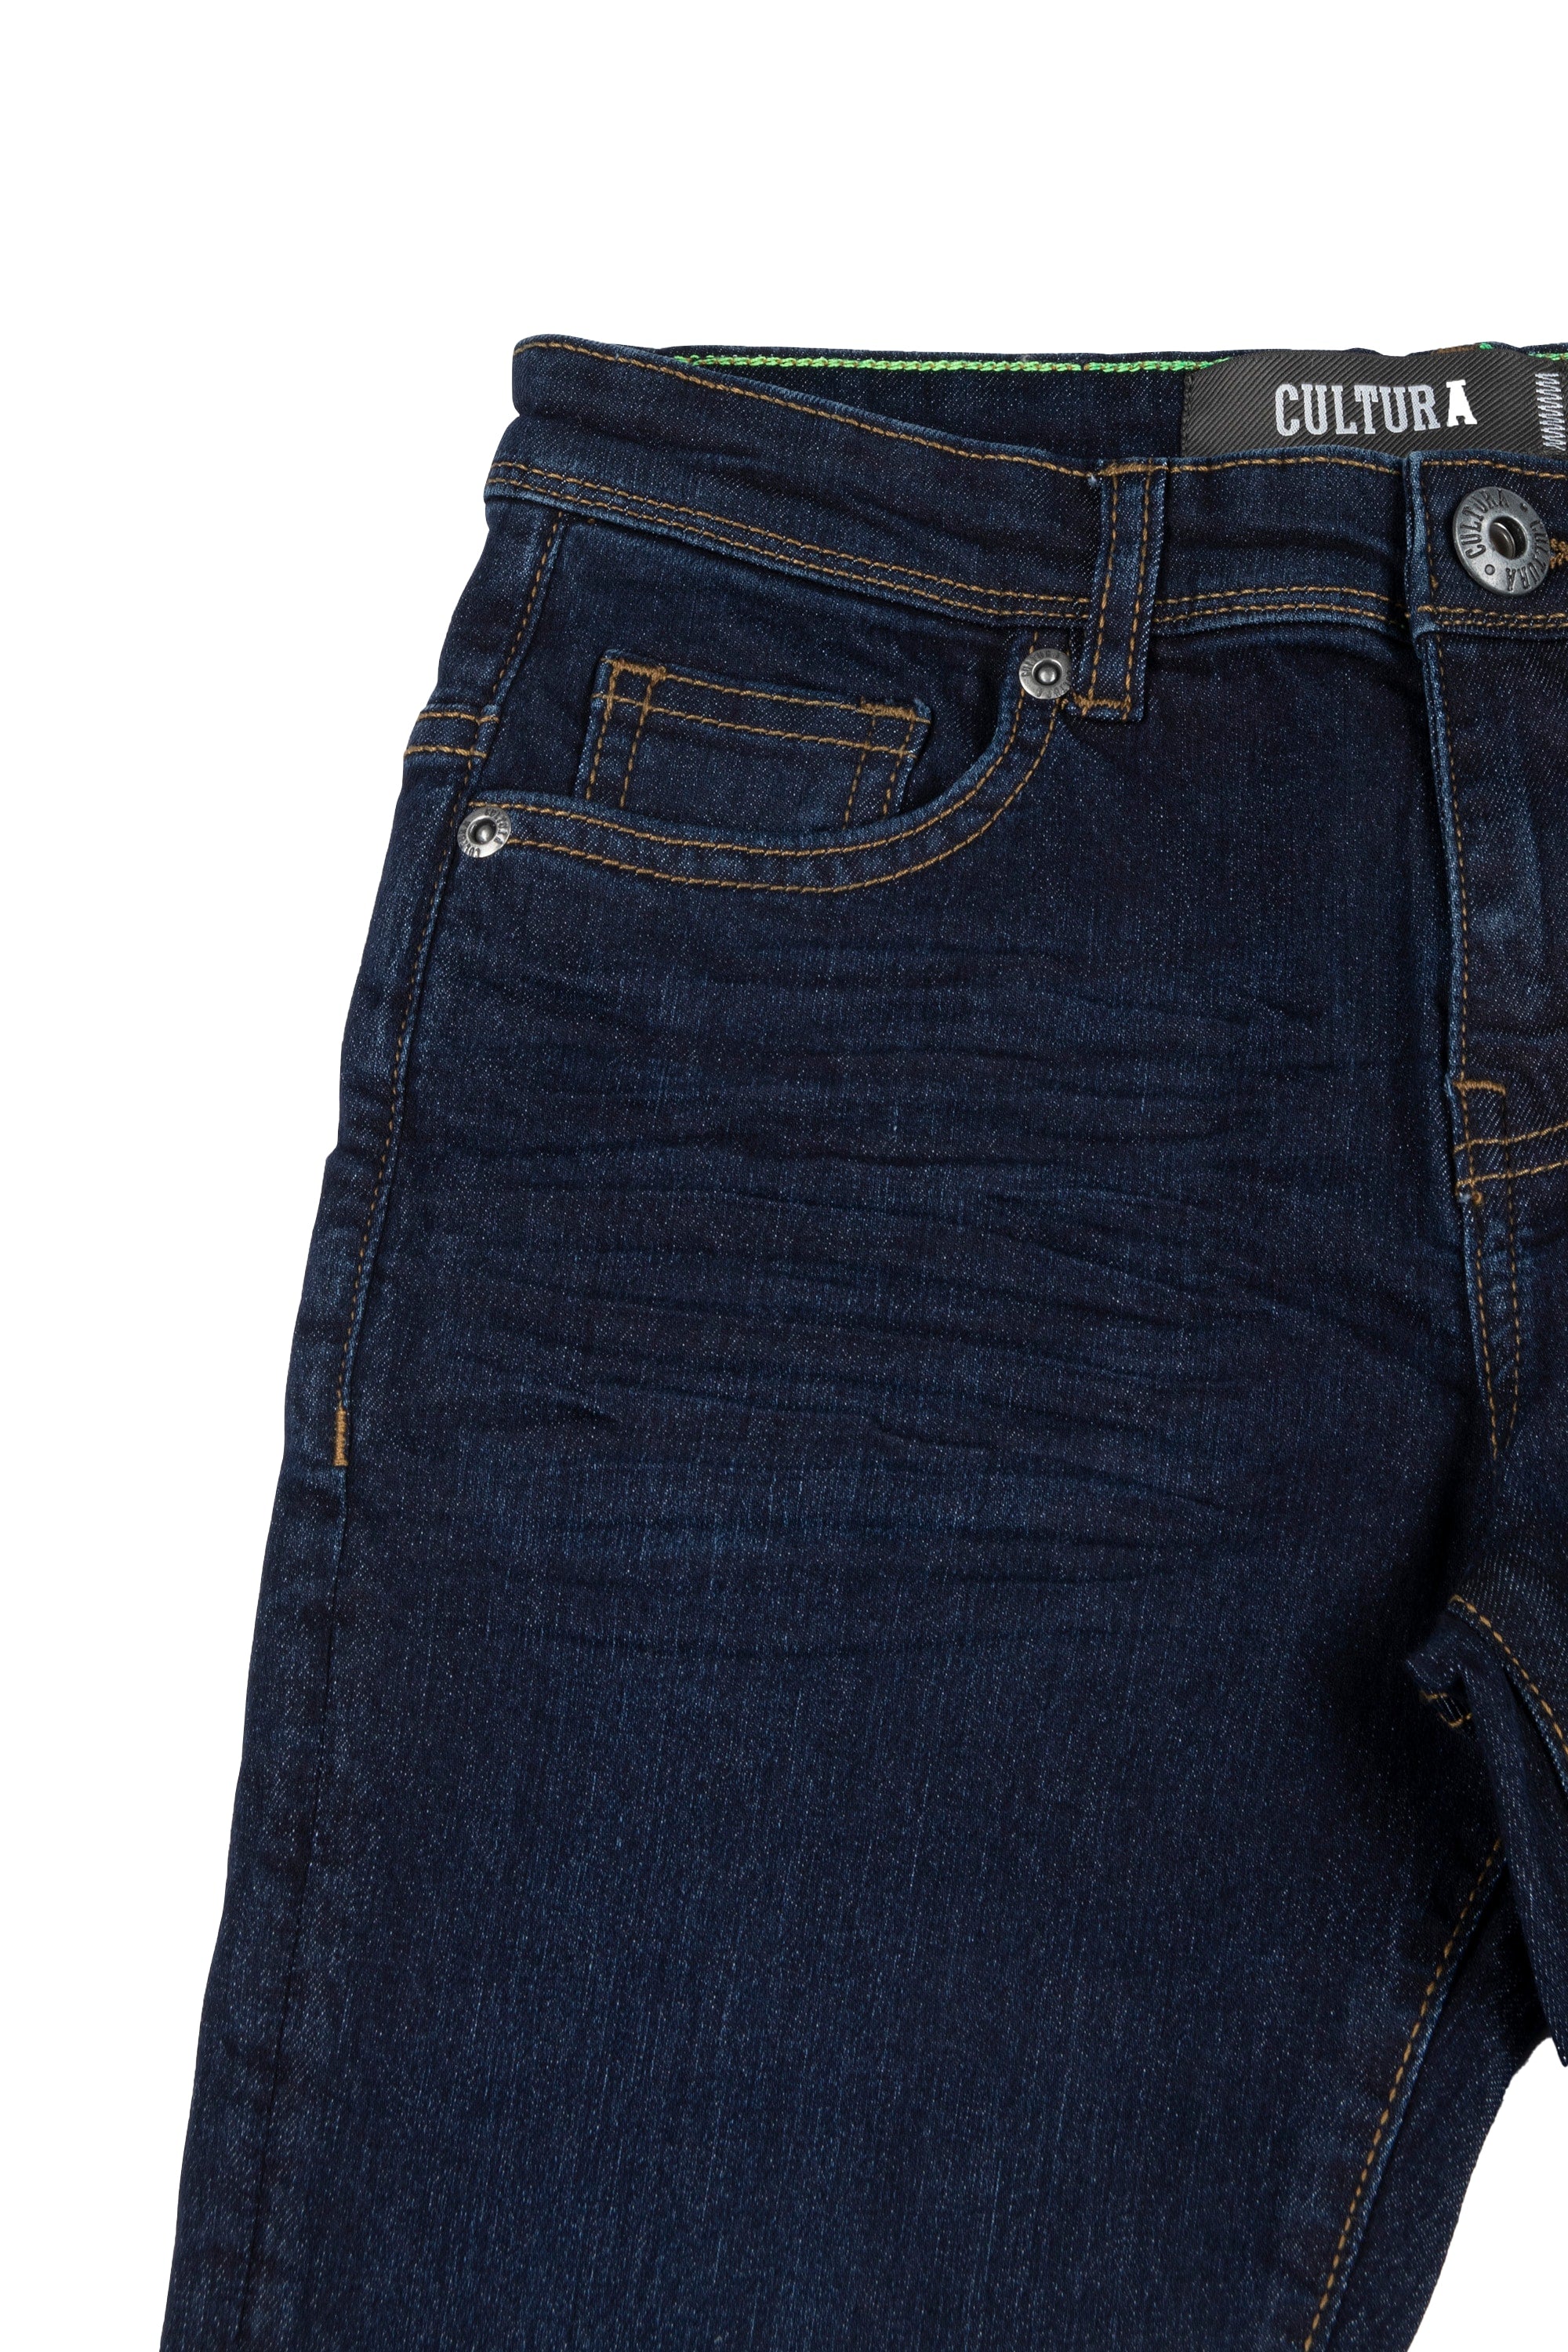 X-RAY Pants – Stitch Accent JEANS Cultura Boys Slim XRay Jeans Wash Denim